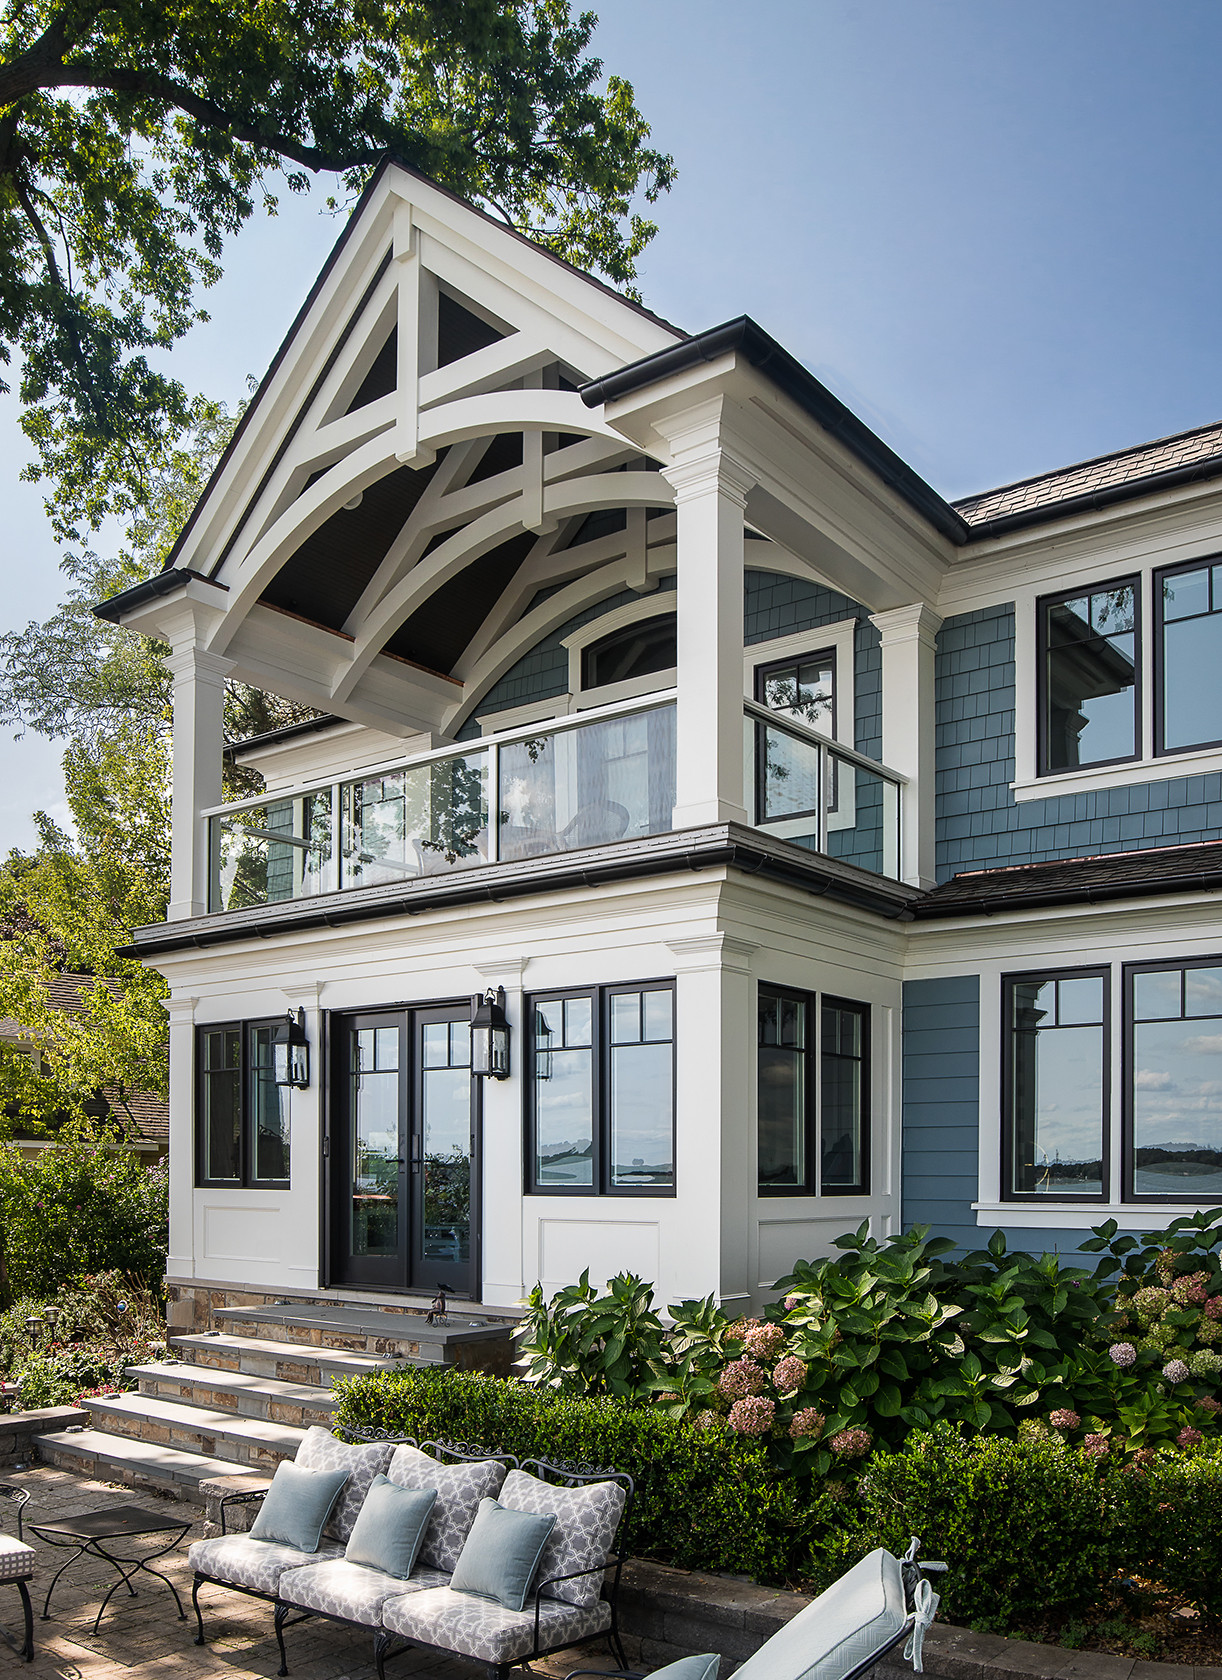 Orchard Lake Whole House Remodel Mainstreet Design Build Img~2391b1c109d91581 14 8392 1 35568ed 